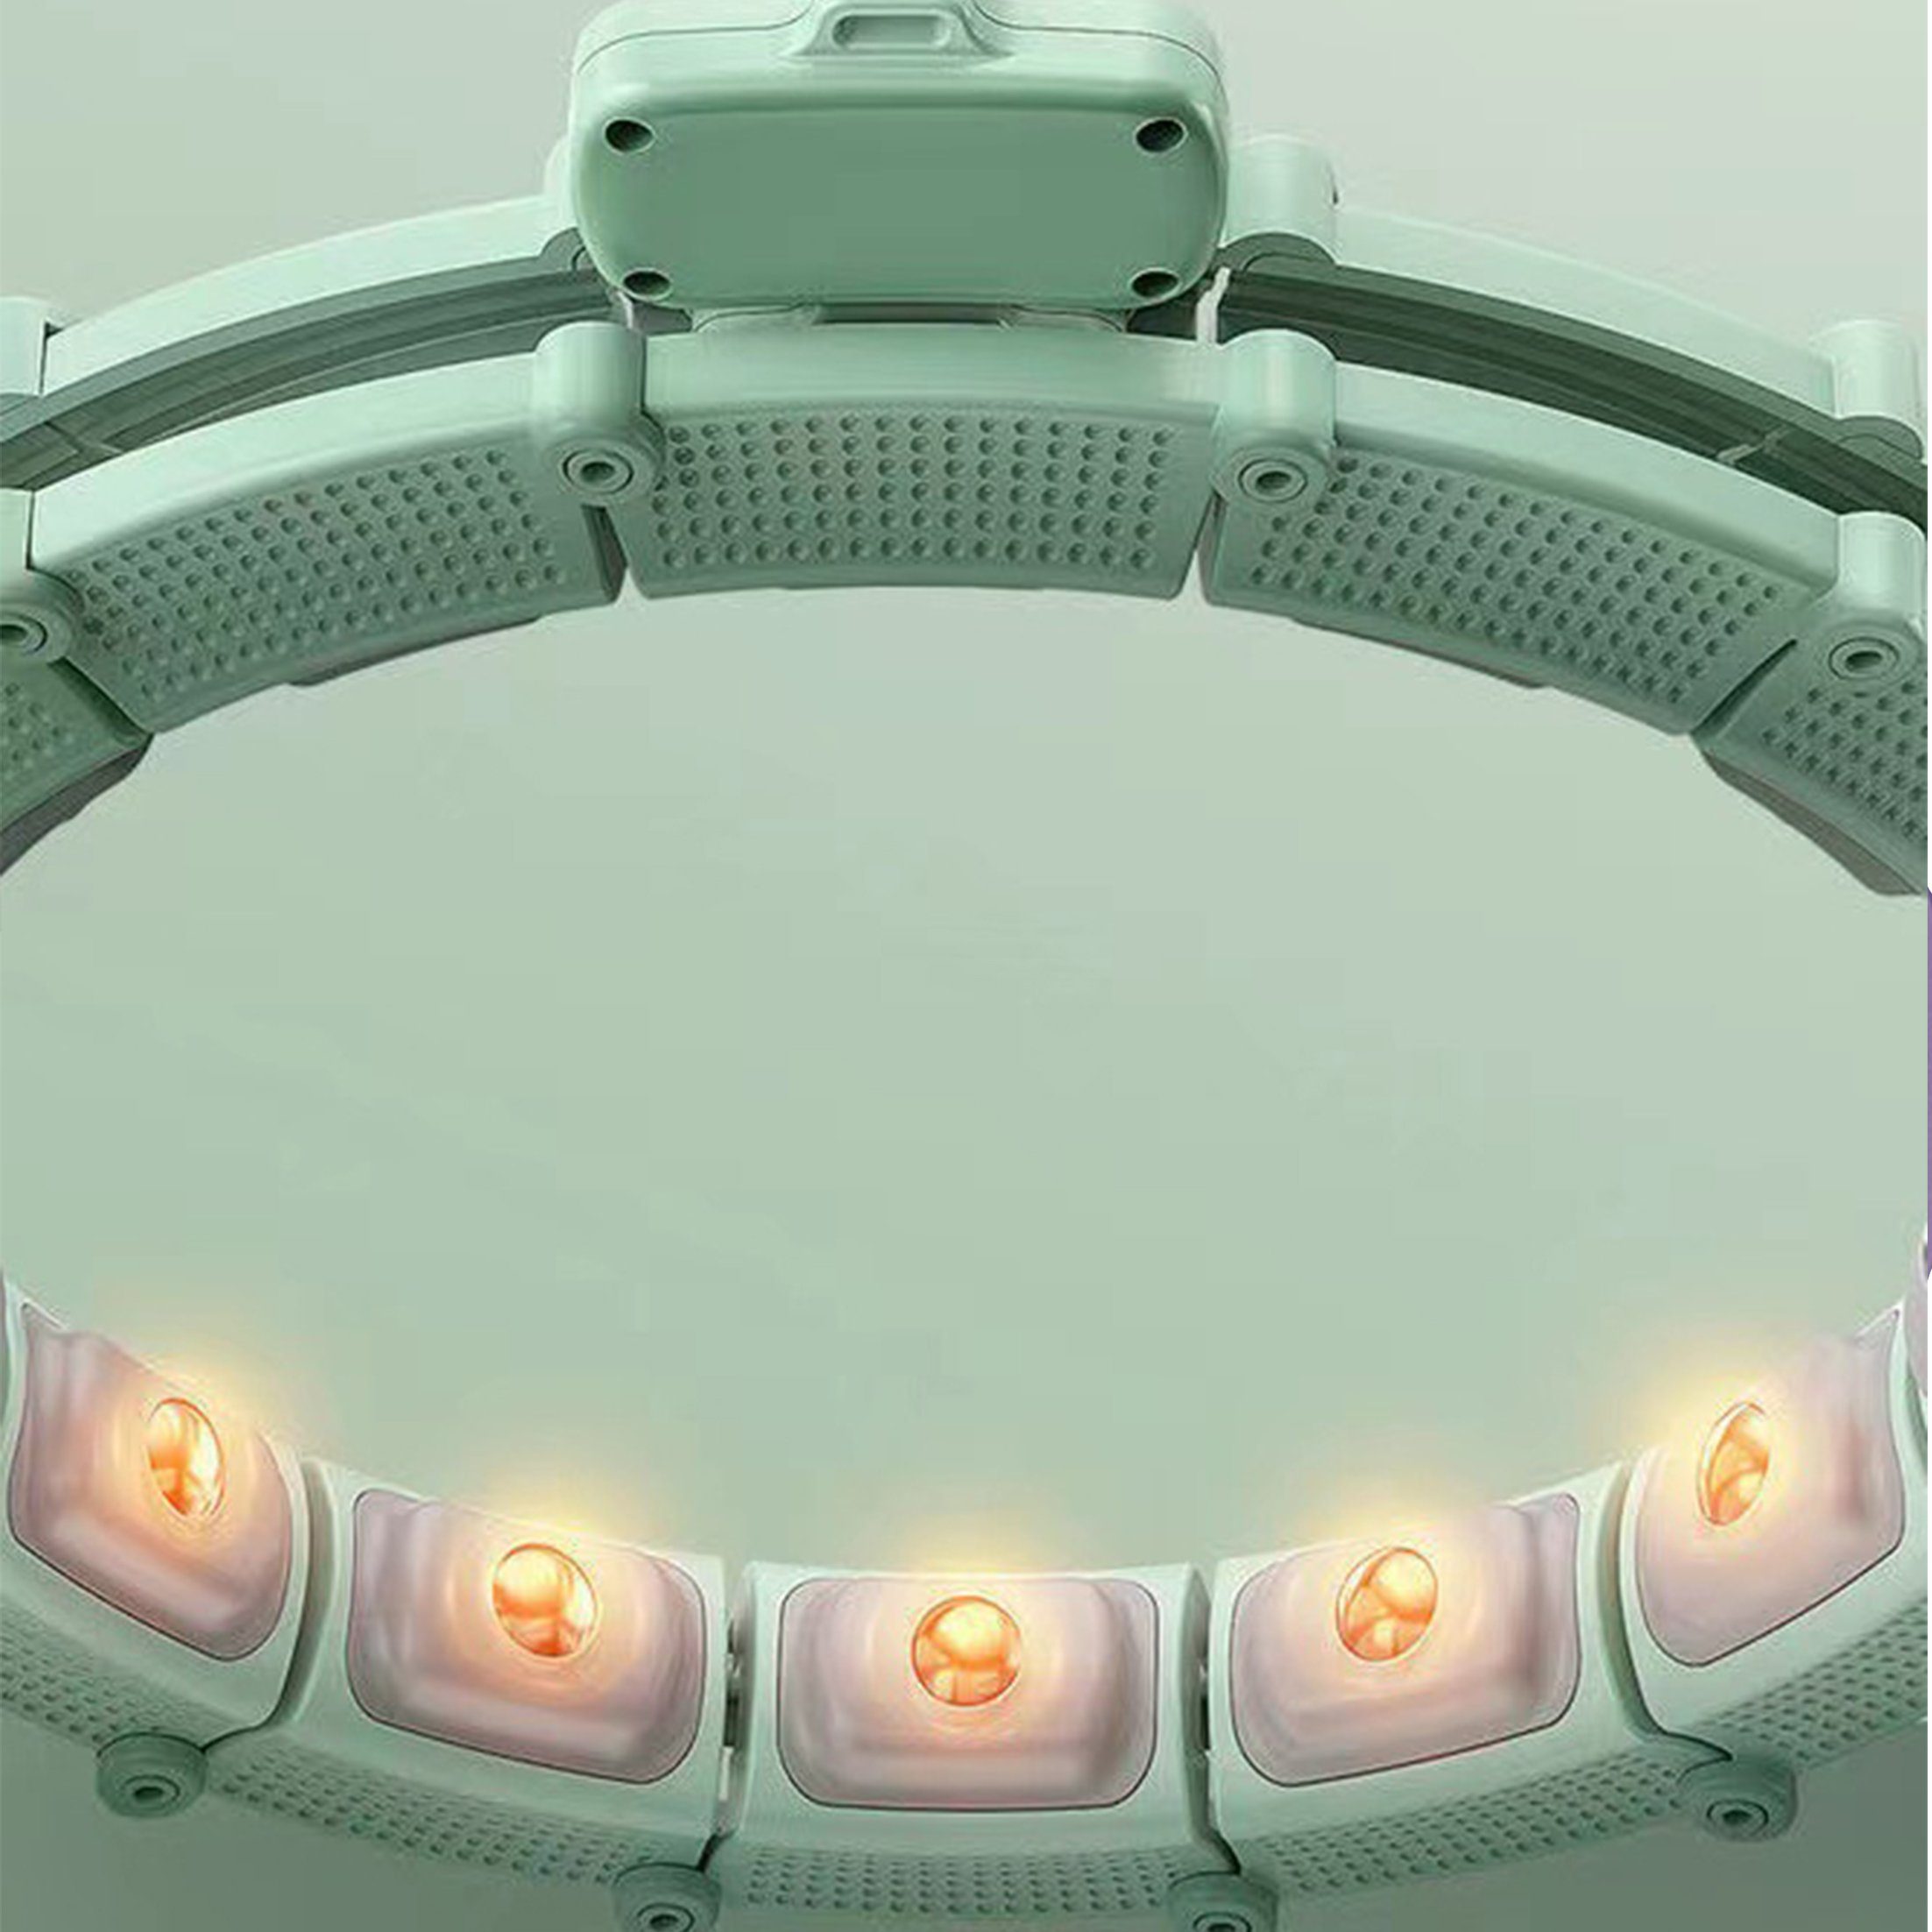 mit Hoop Hula 360°Massage Smart Hüftgürtel Abschnitt einem 21 einstellbar, Grün Hula-Hoop-Reifen zählbare KINSI